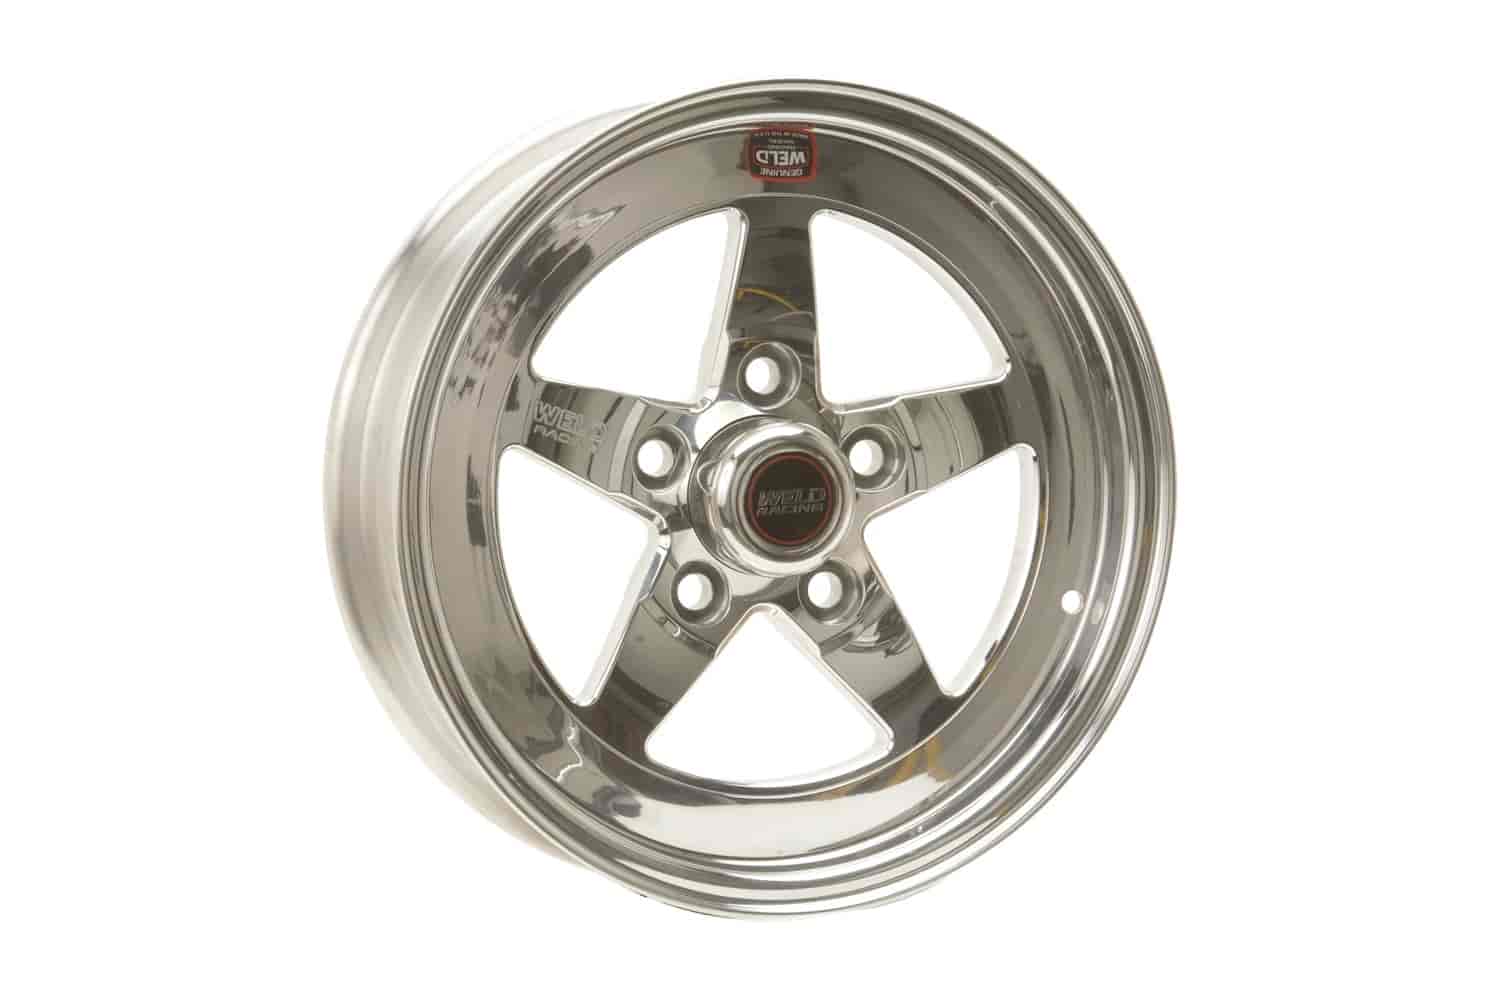 RT-S Series Wheel Size: 15" x 4"